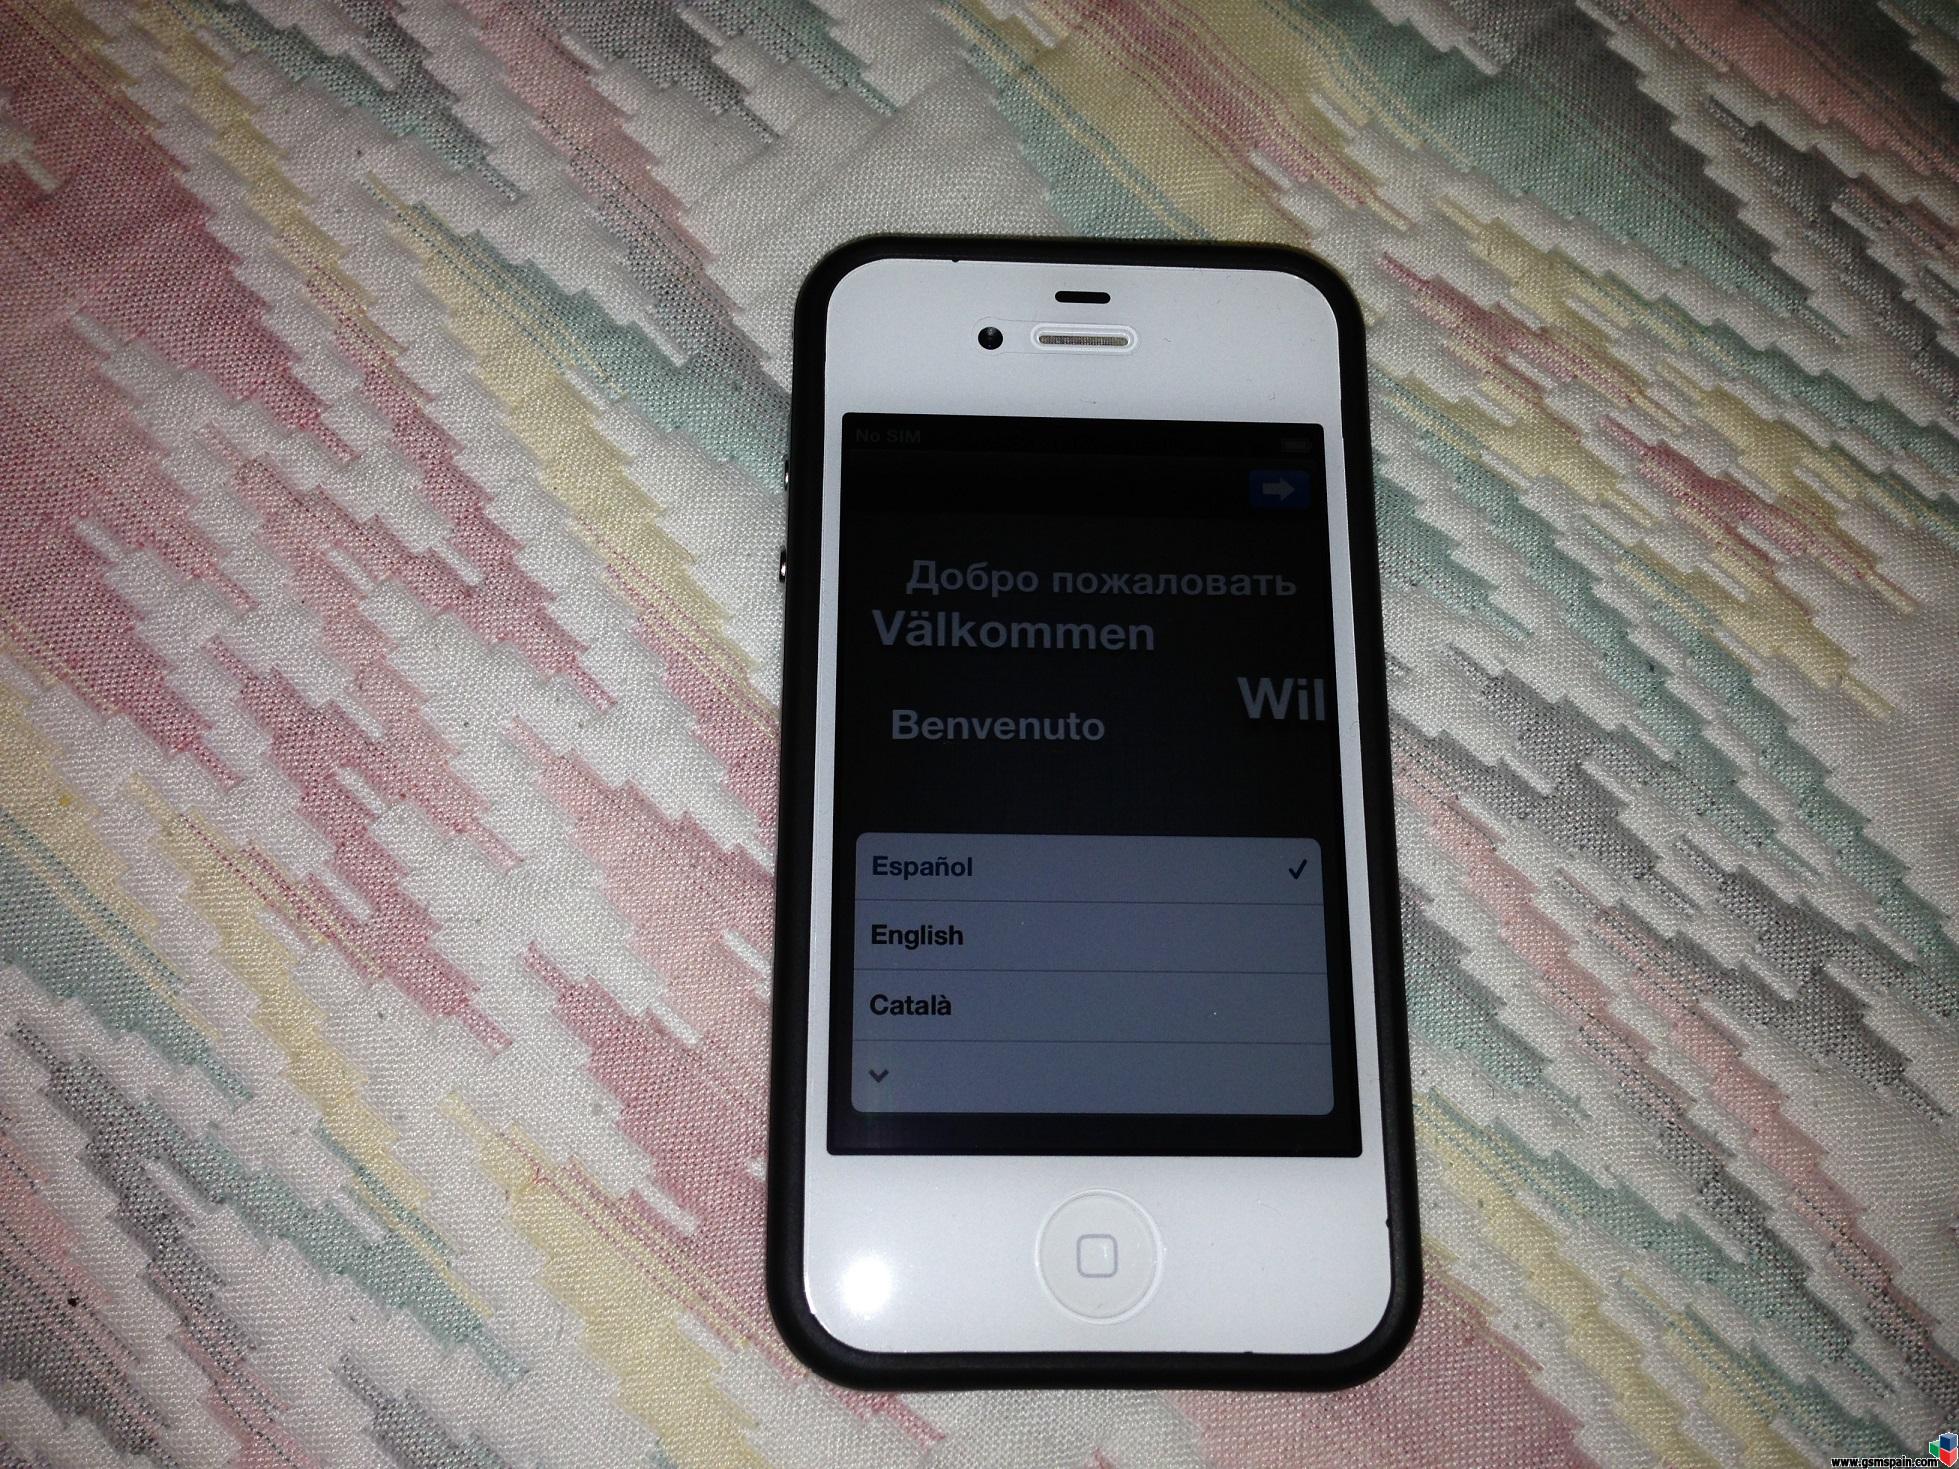 [VENDO] Iphone 4 16Gb Blanco LIBRE Impecable